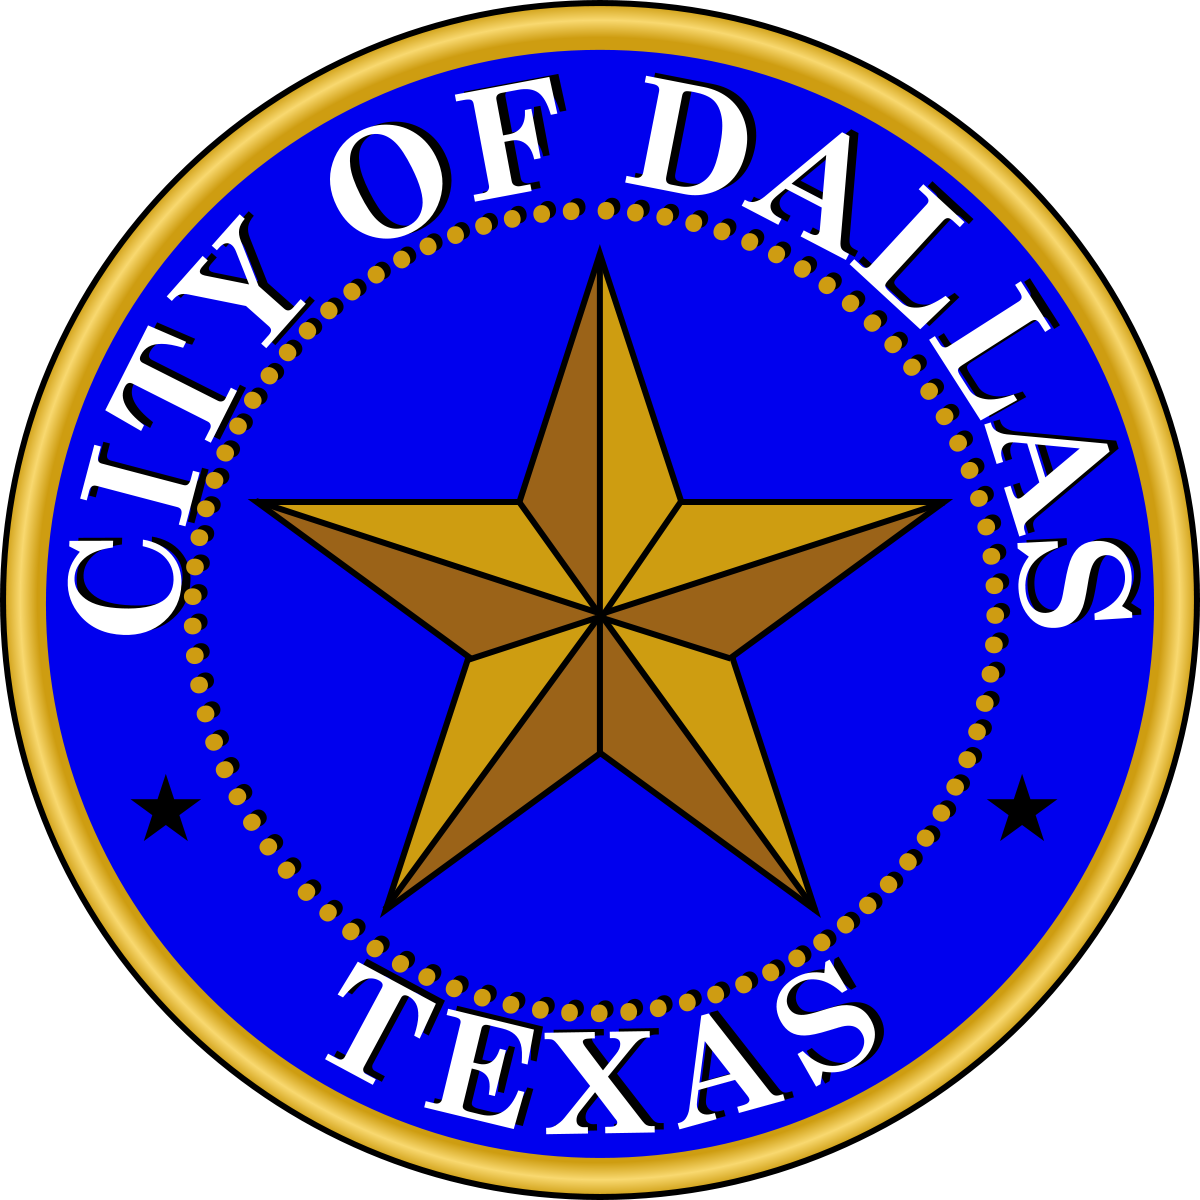 Dallas logo and seal